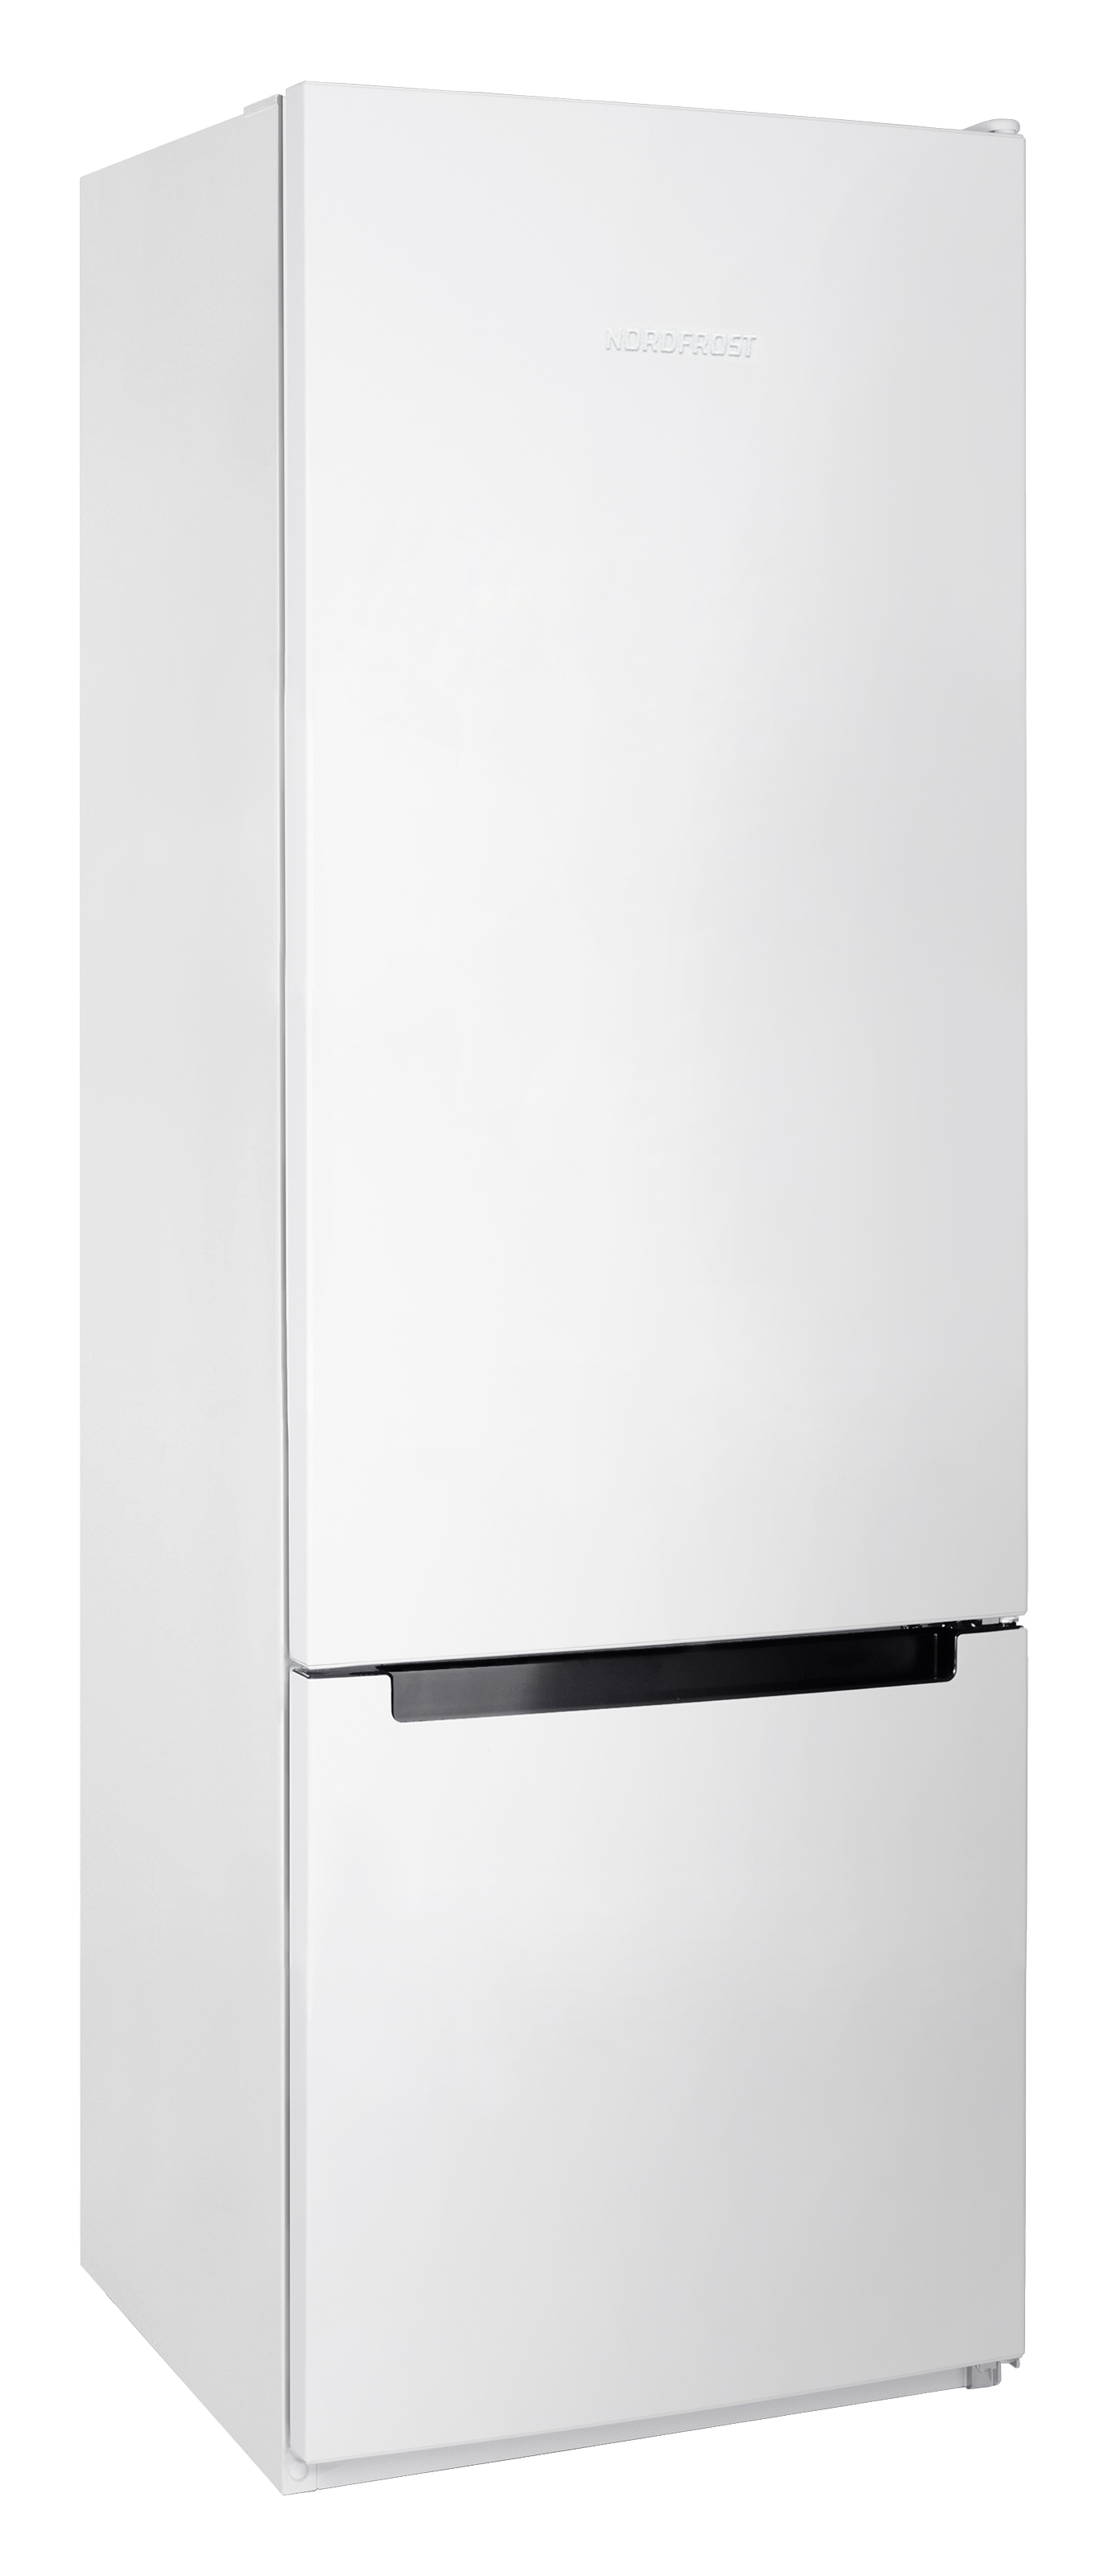 Холодильник NordFrost NRB 124 W белый многокамерный холодильник nordfrost rfq 510 nfgw inverter